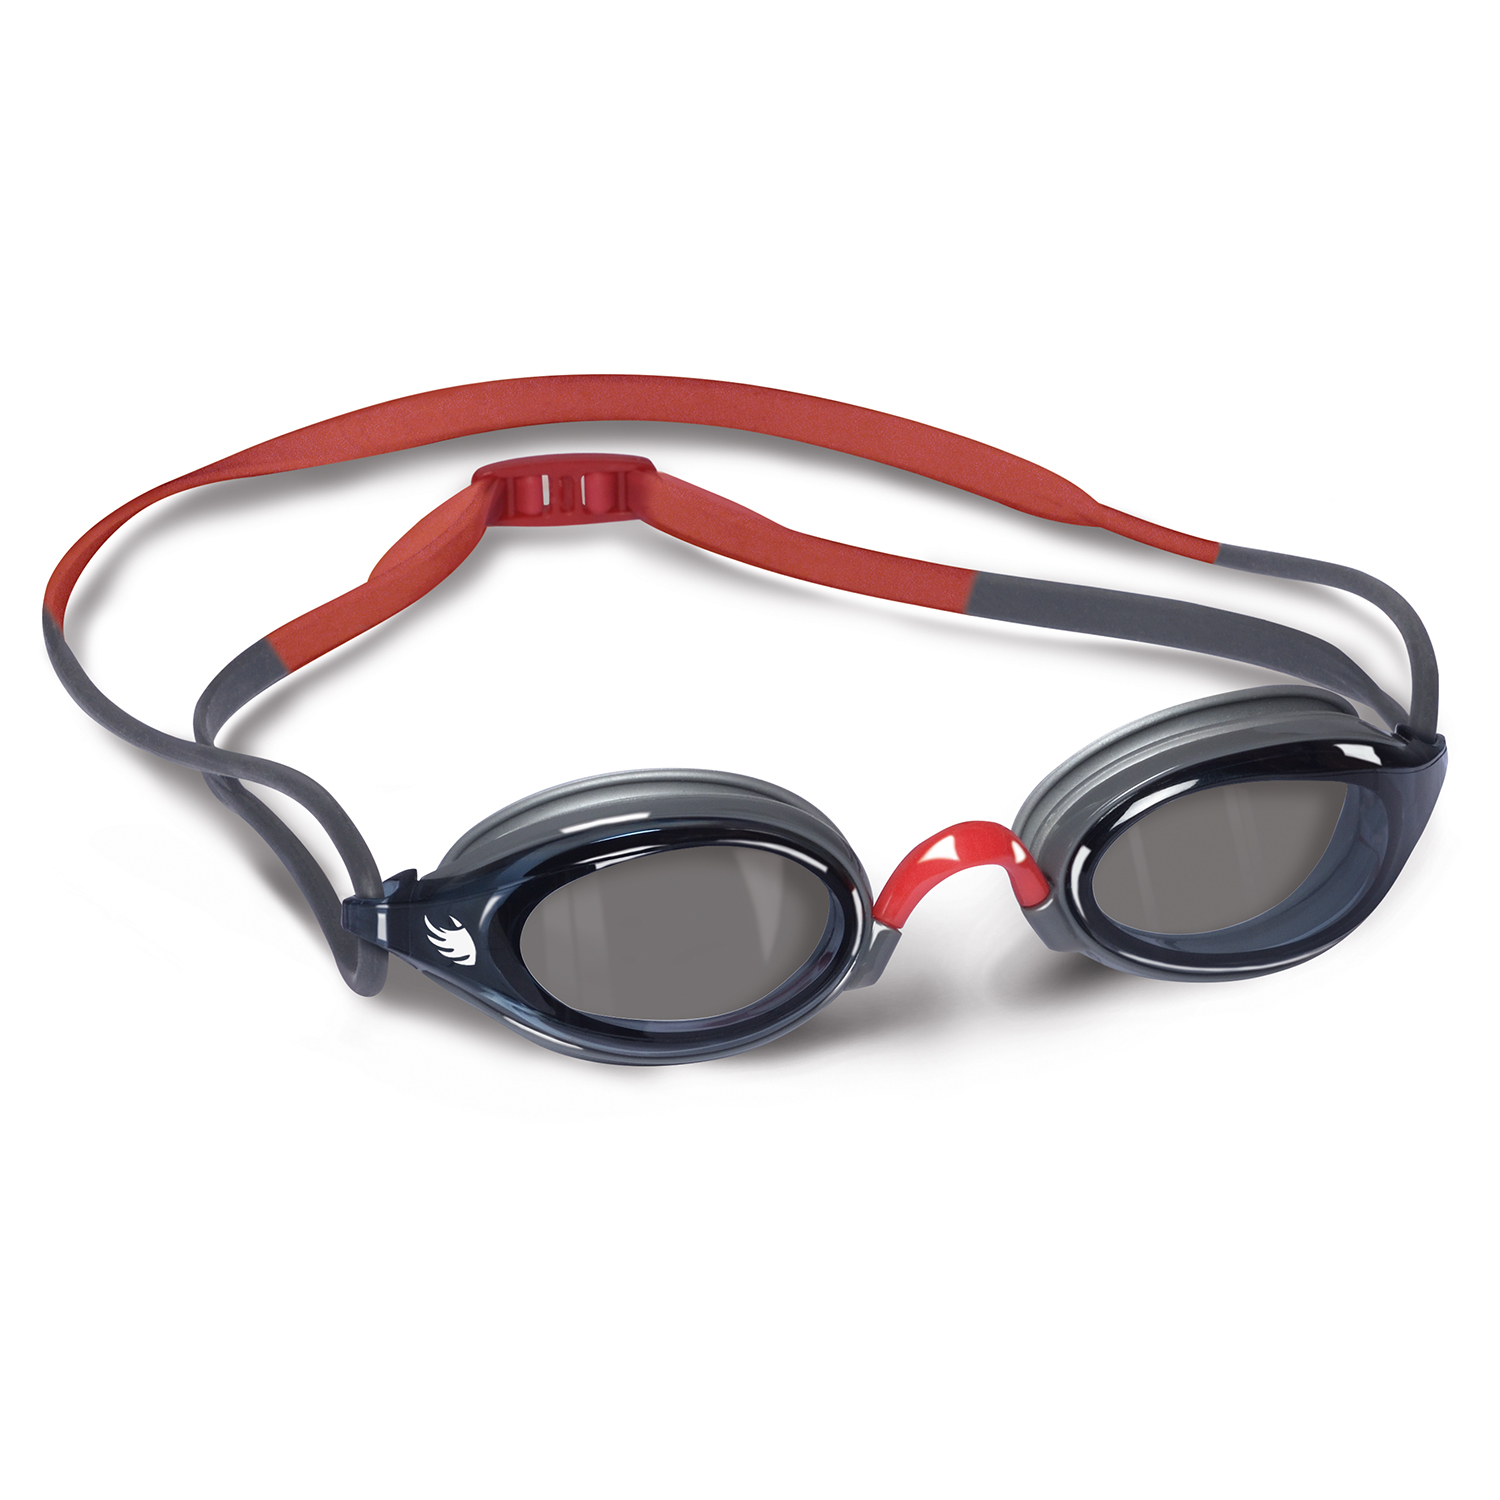 BTTLNS Tyraxes 1.0 smoke lenses goggle silver/red  0121019-099